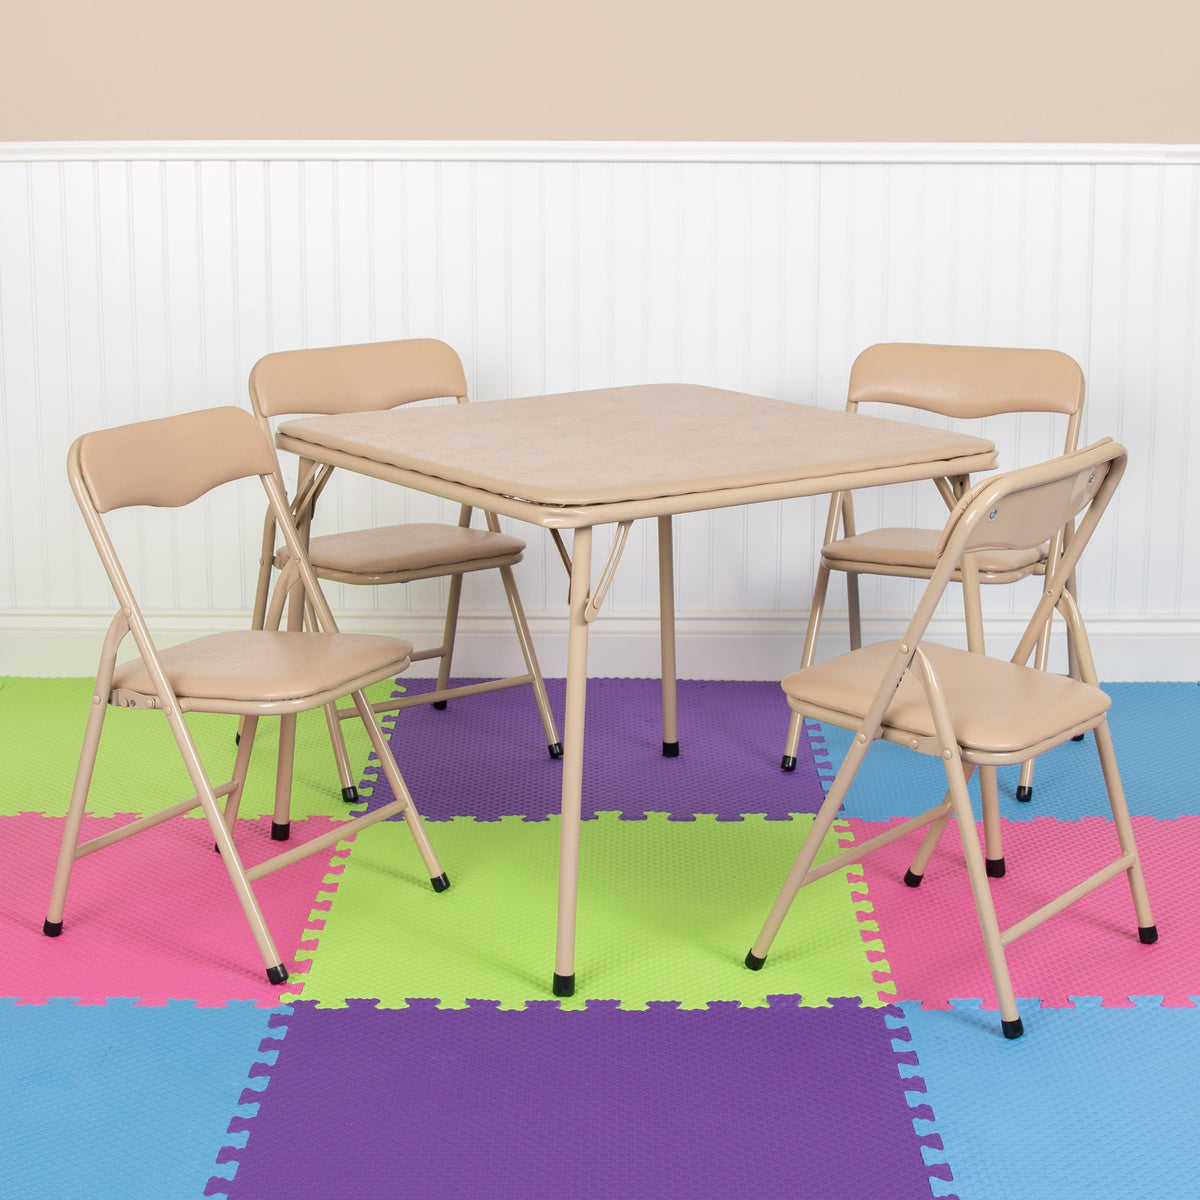 Tan |#| Kids Tan 5 Piece Folding Table and Chair Set - Kids Activity Table Set